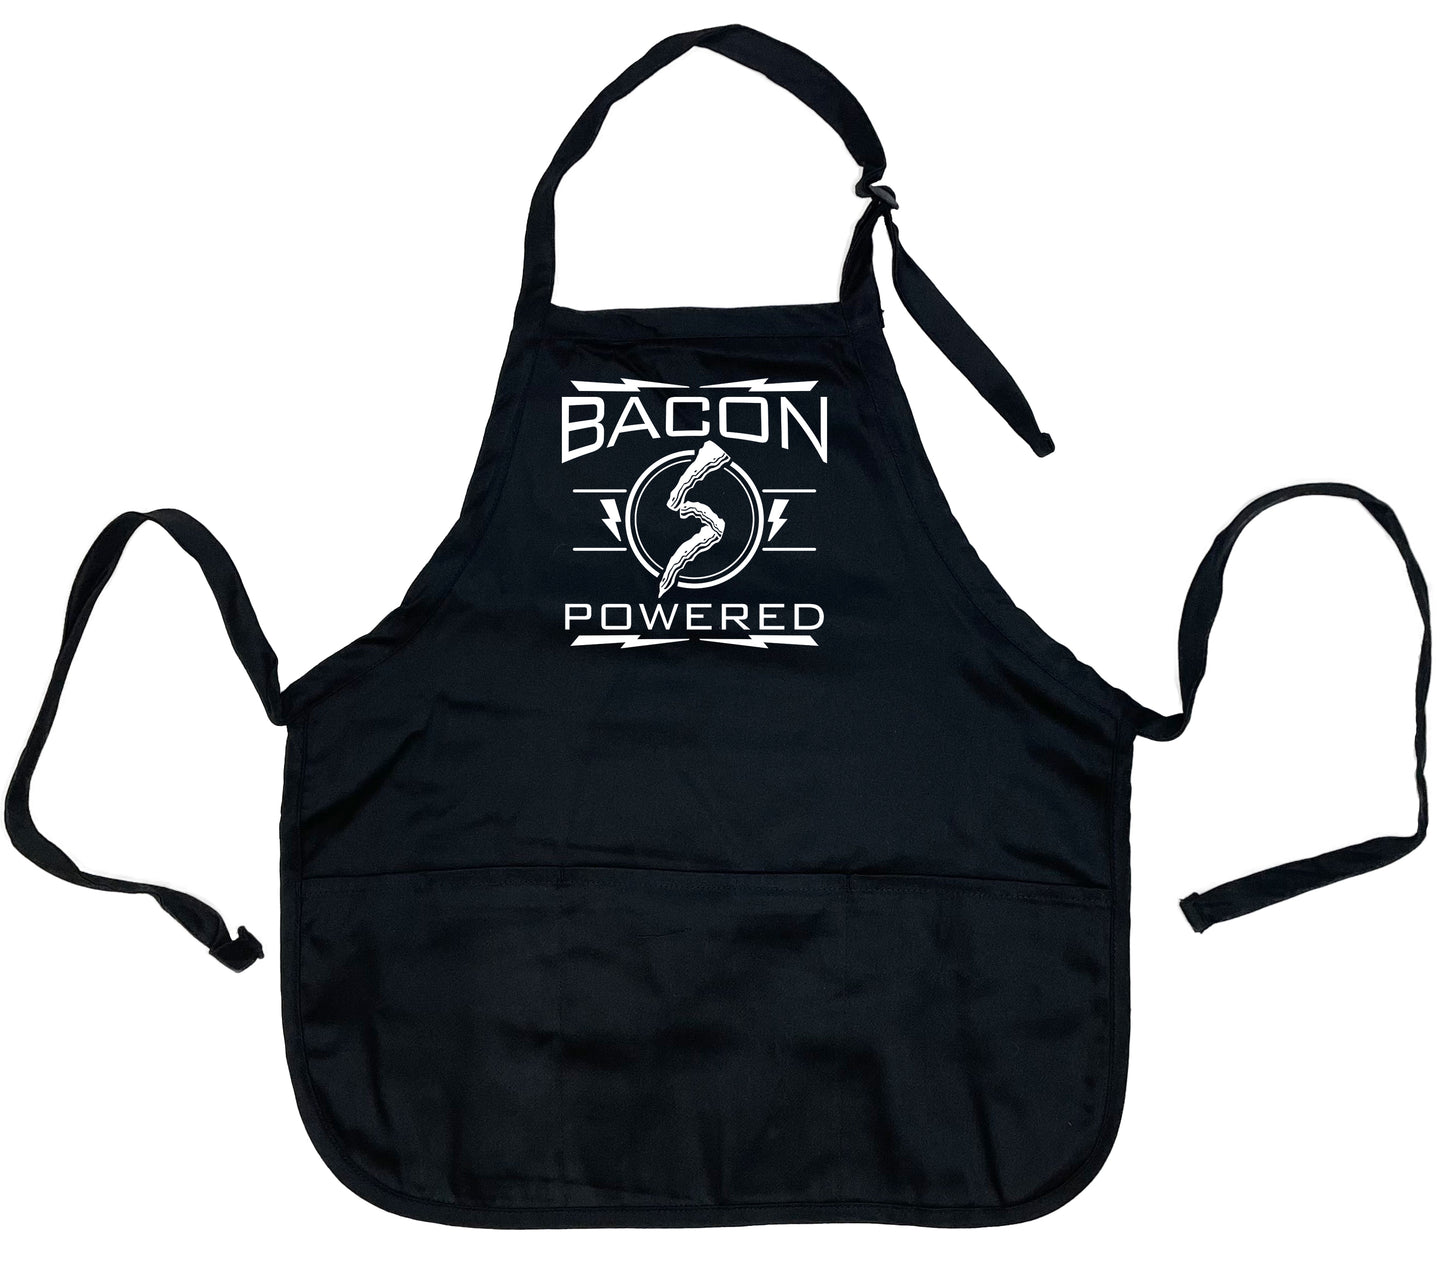 Bacon Powered Apron